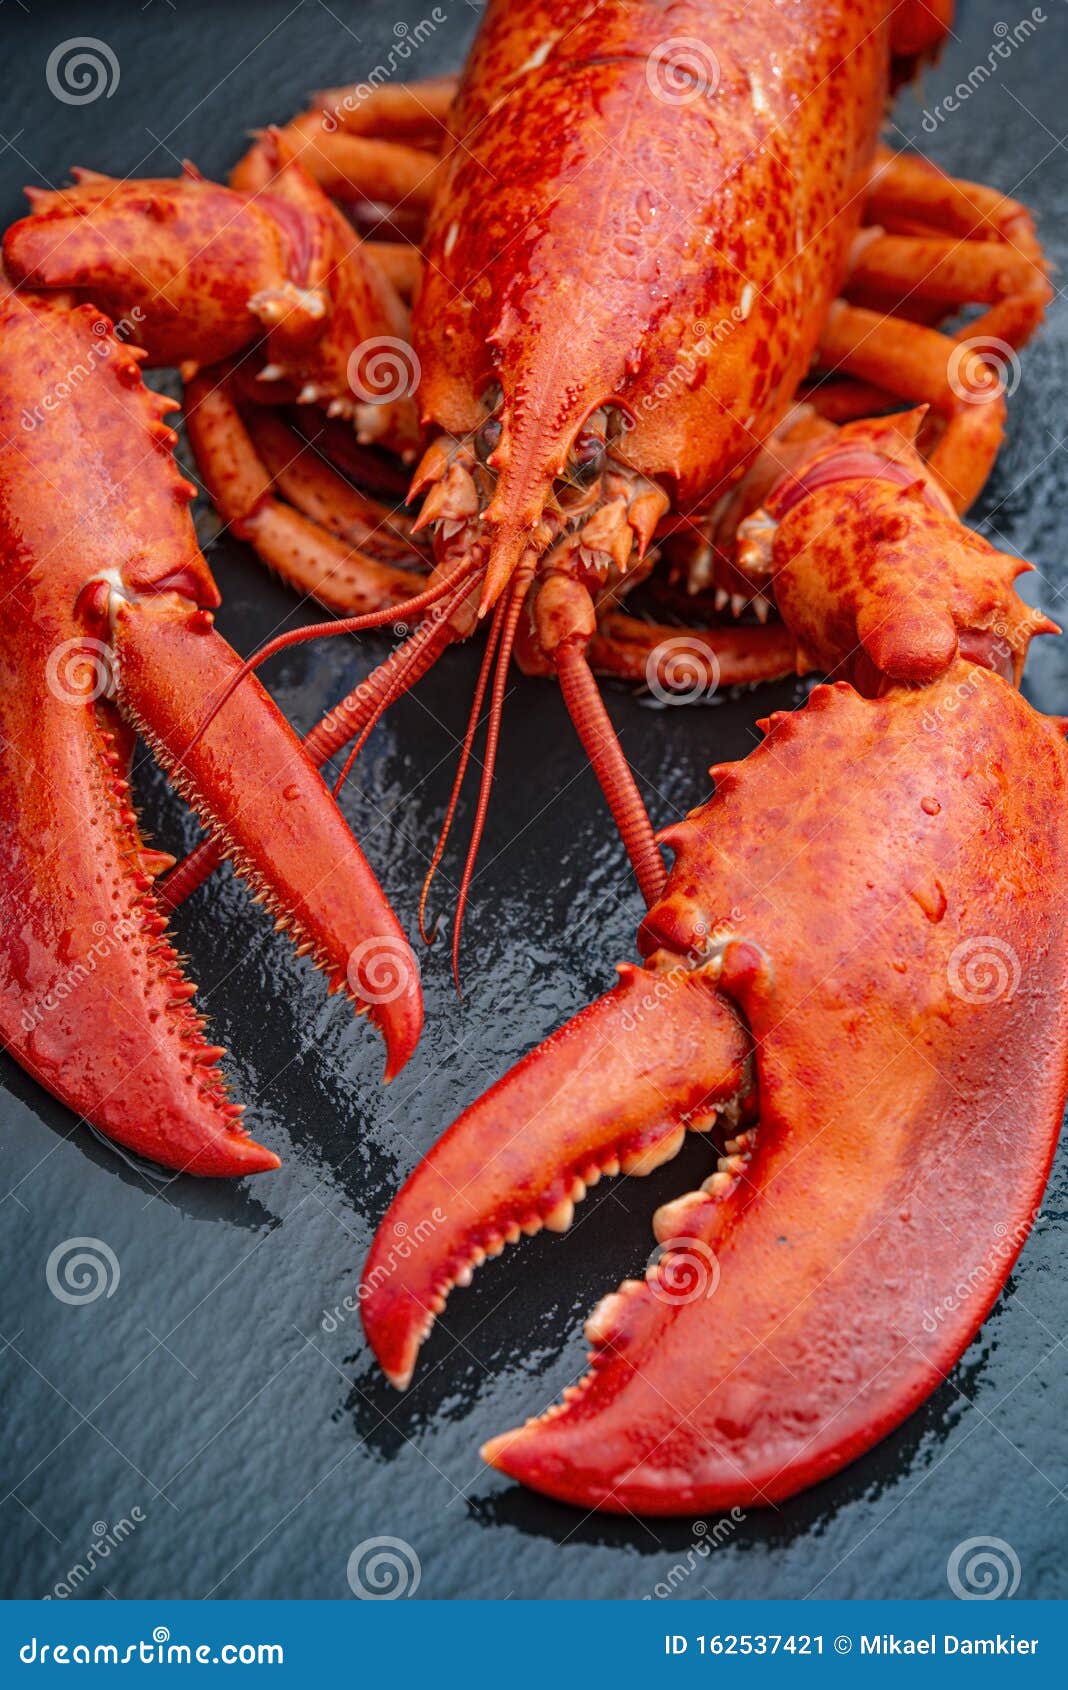 Steamed lobster stock afbeelding. Image of gastronomisch - 162537421